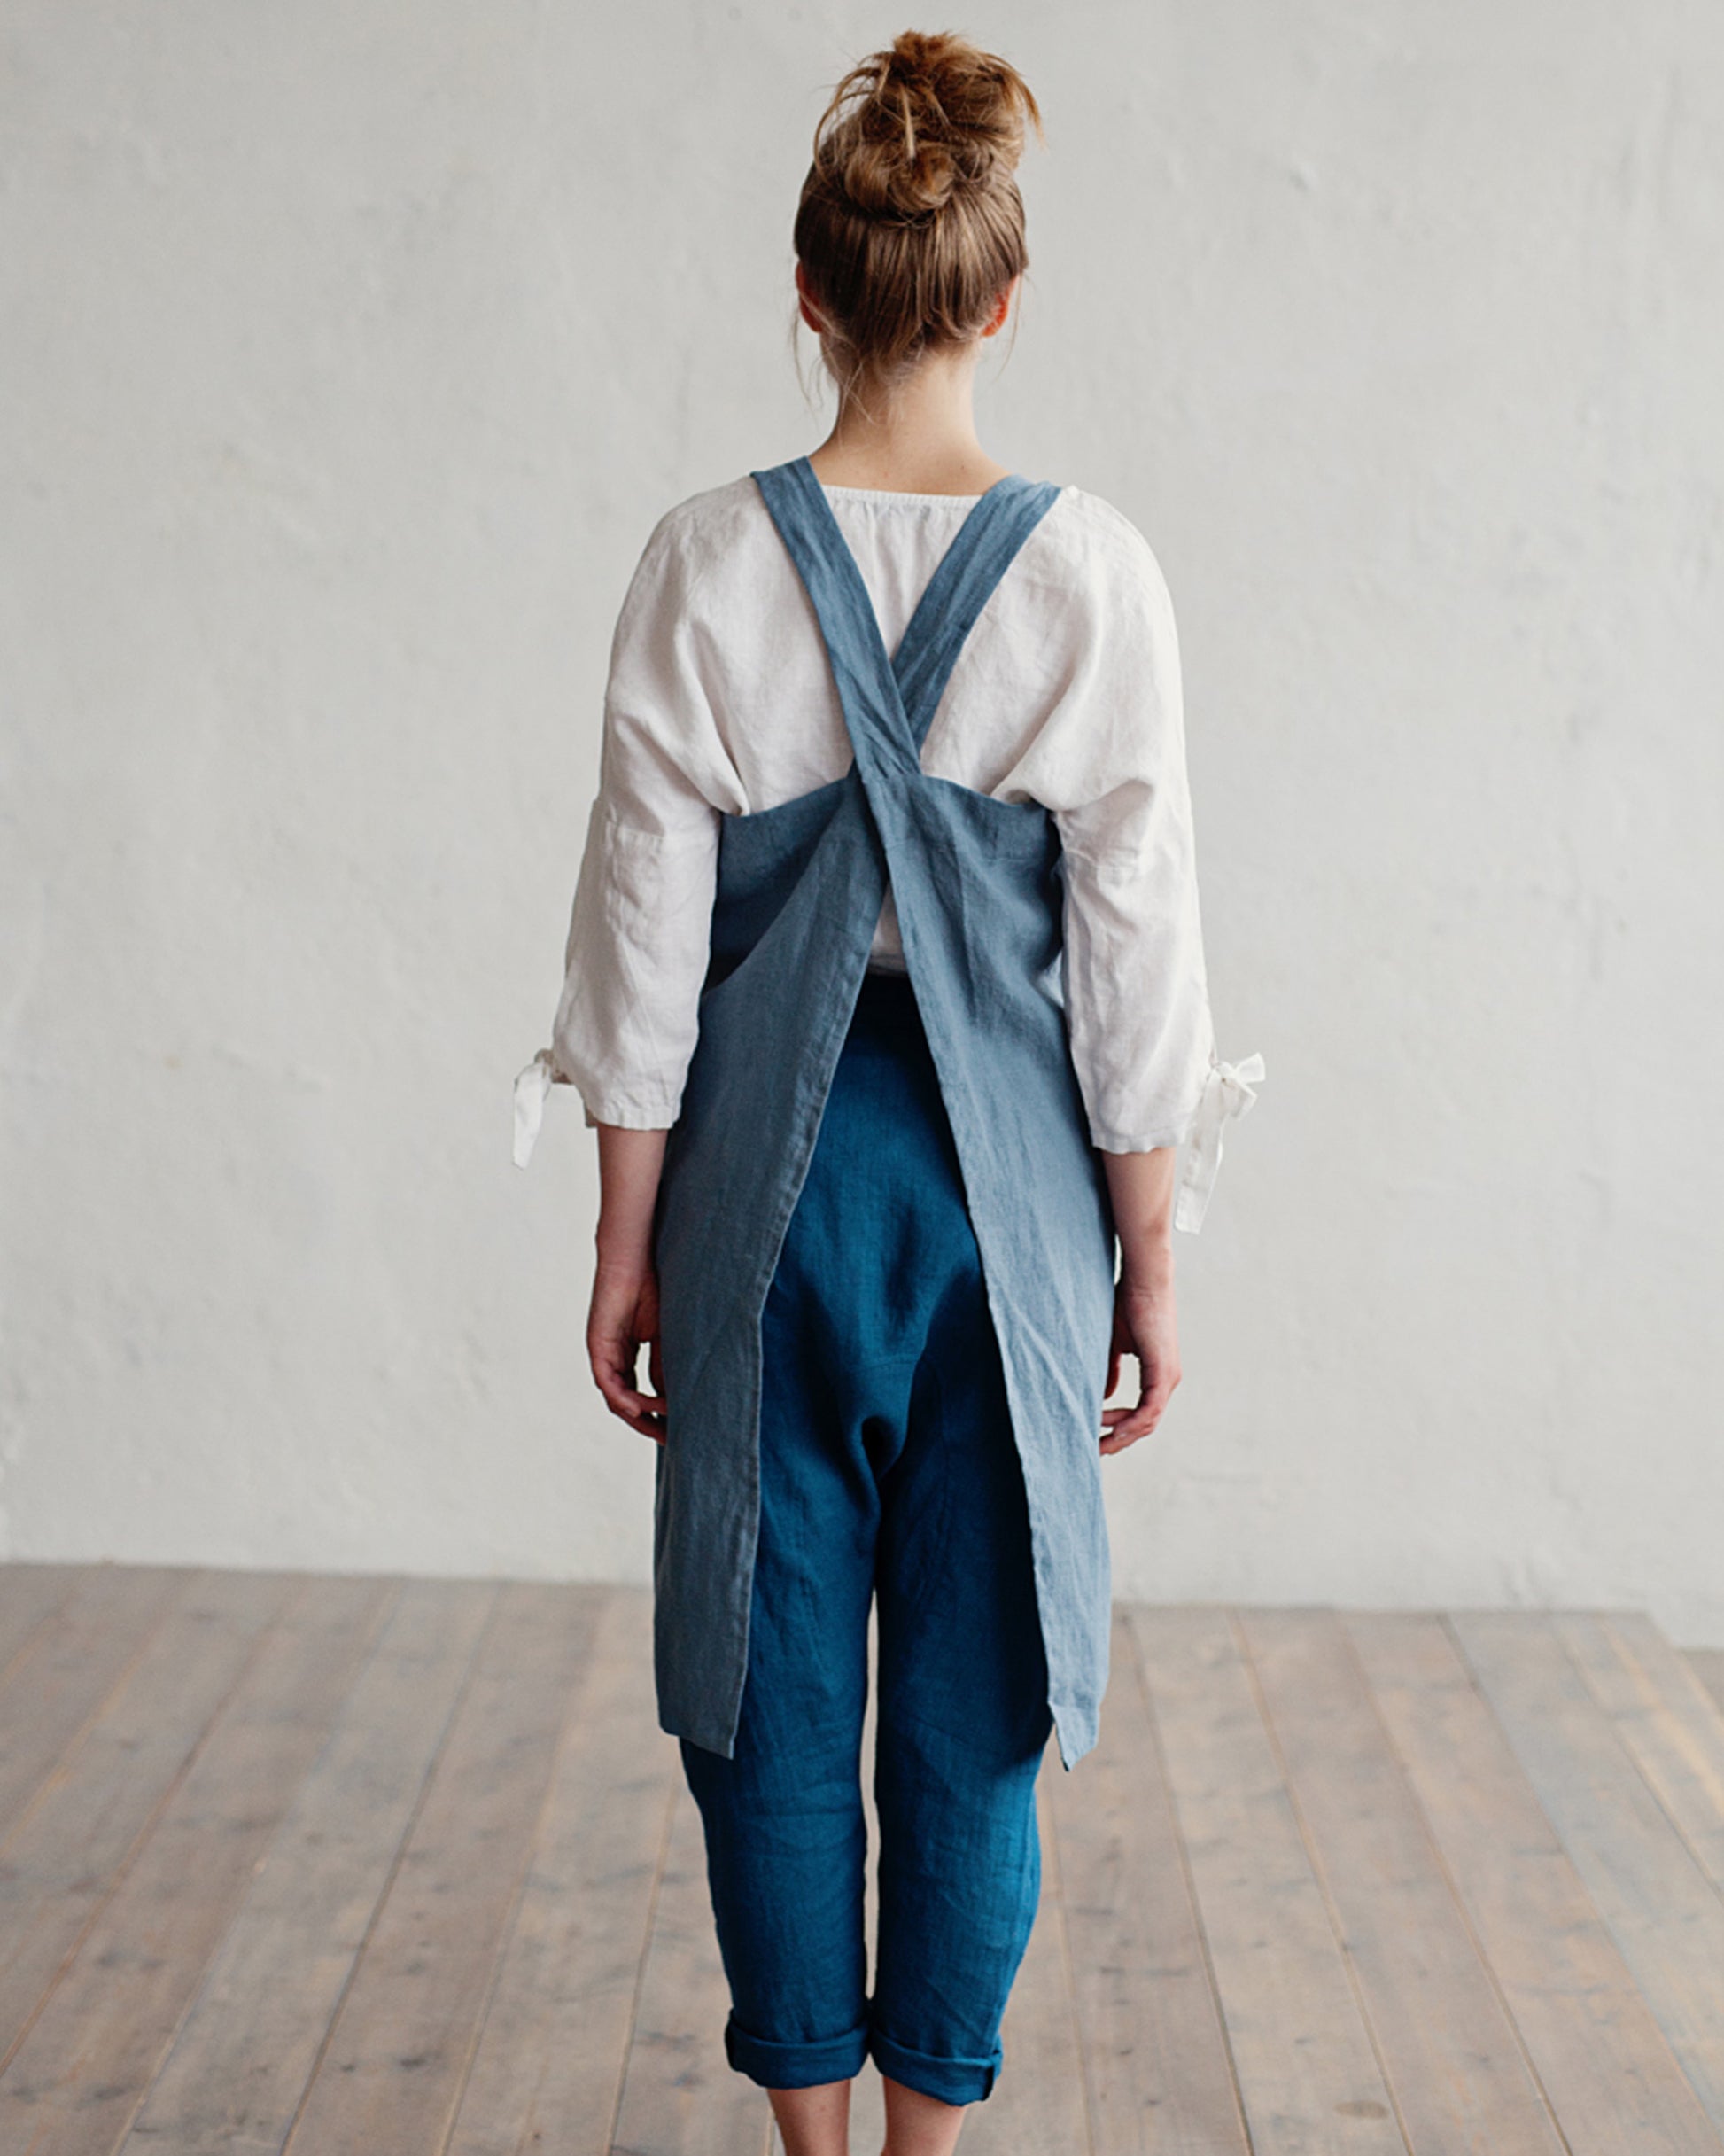 Japanese cross-back linen apron in Gray blue - MagicLinen